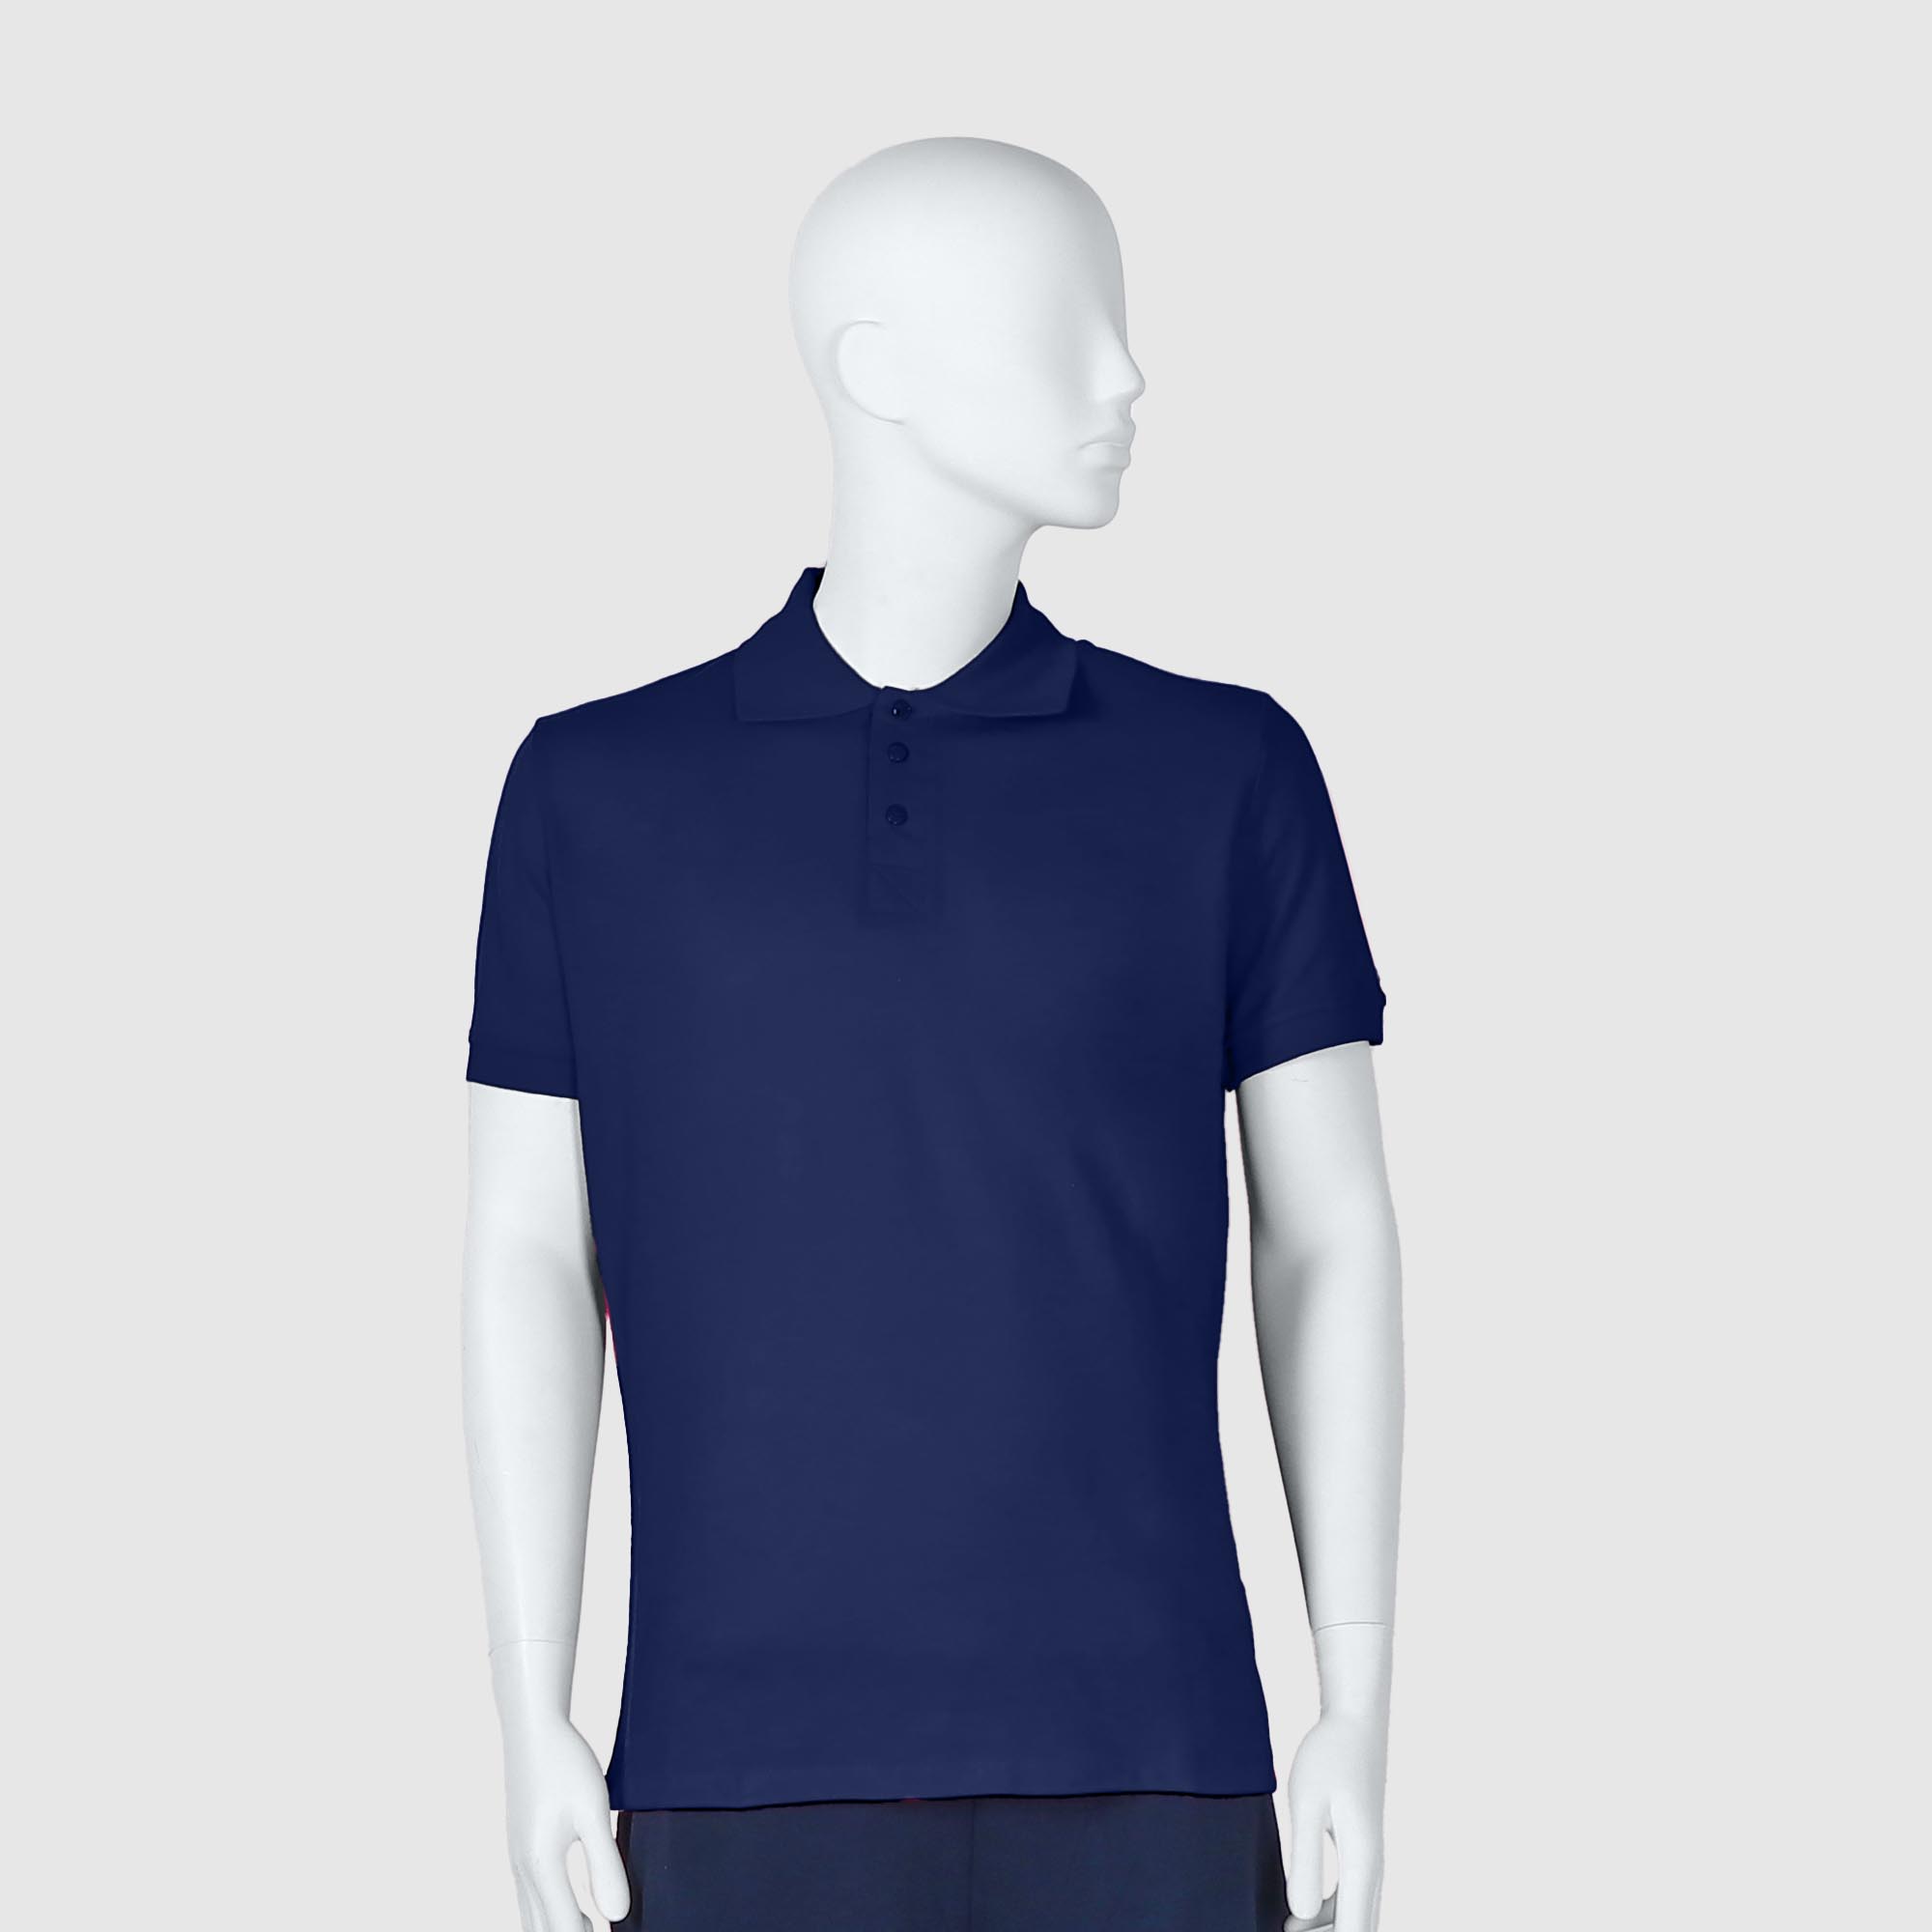 Мужская футболка-поло Diva Teks синяя (DTD-10), цвет синий, размер 52-54 - фото 1